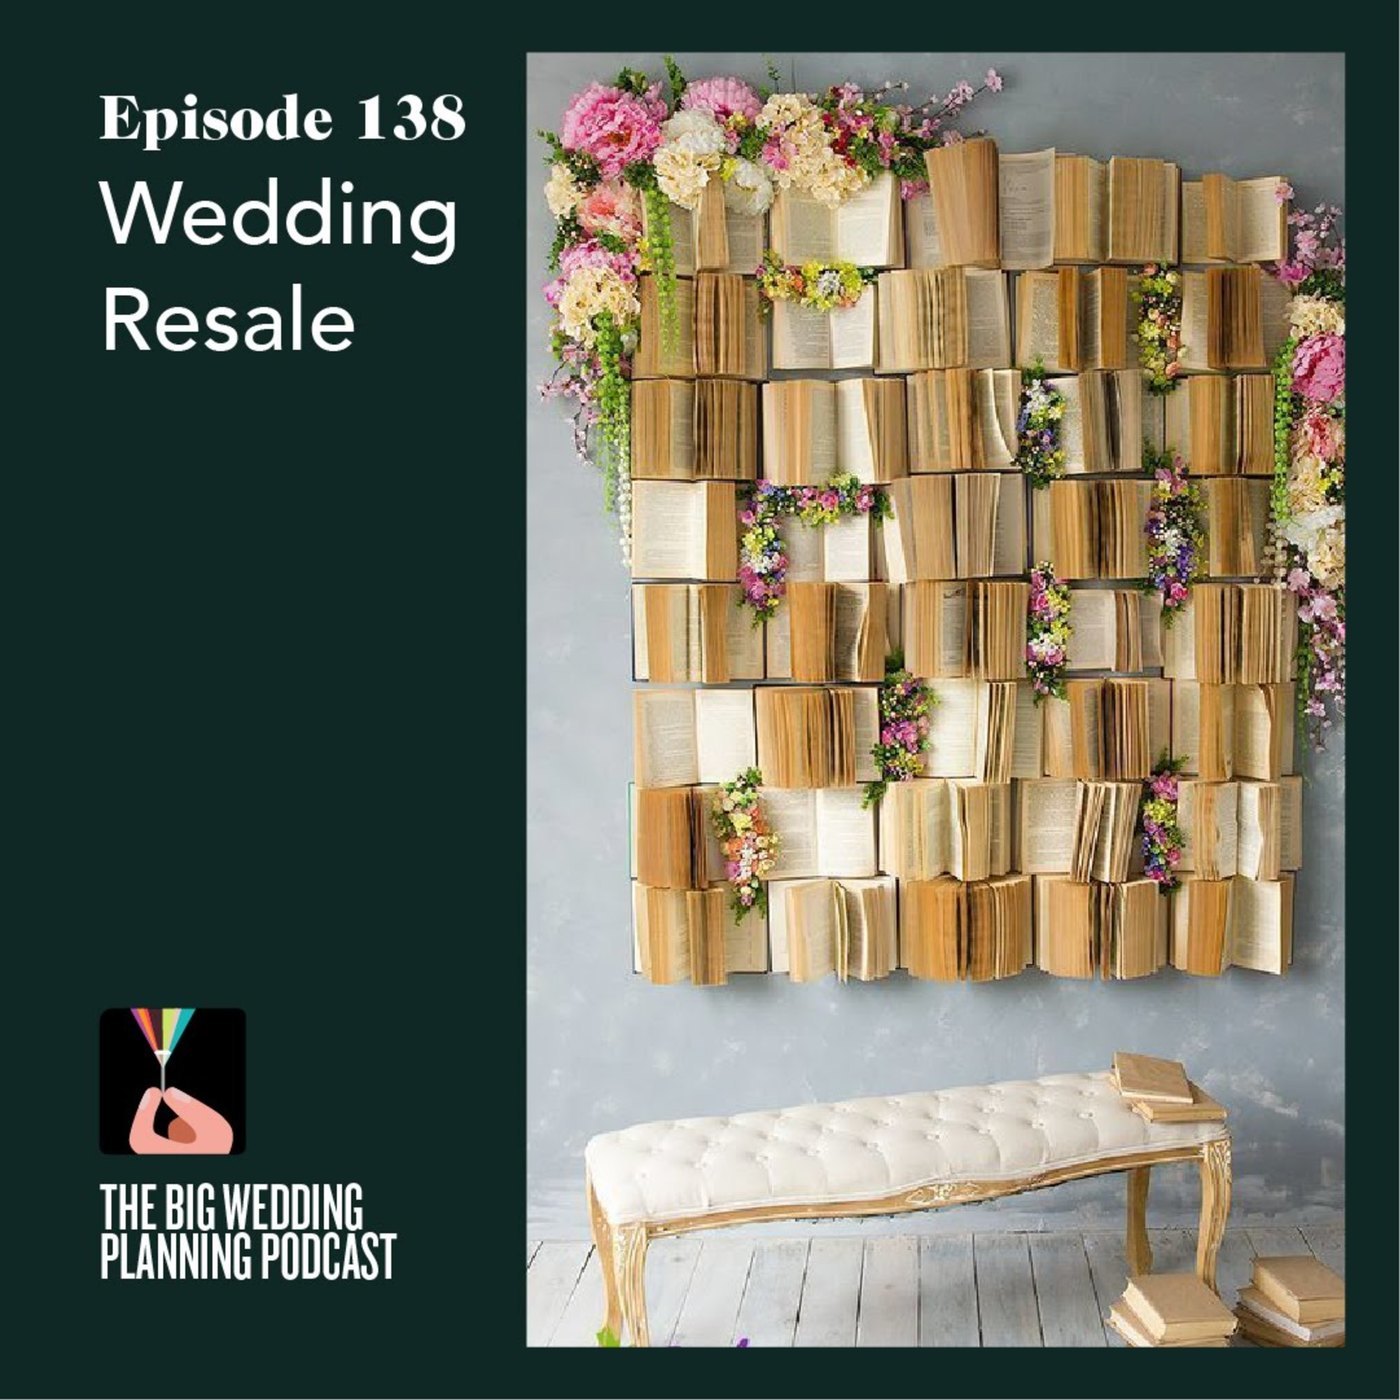 The Big Wedding Planning Podcast 138 Wedding Resale